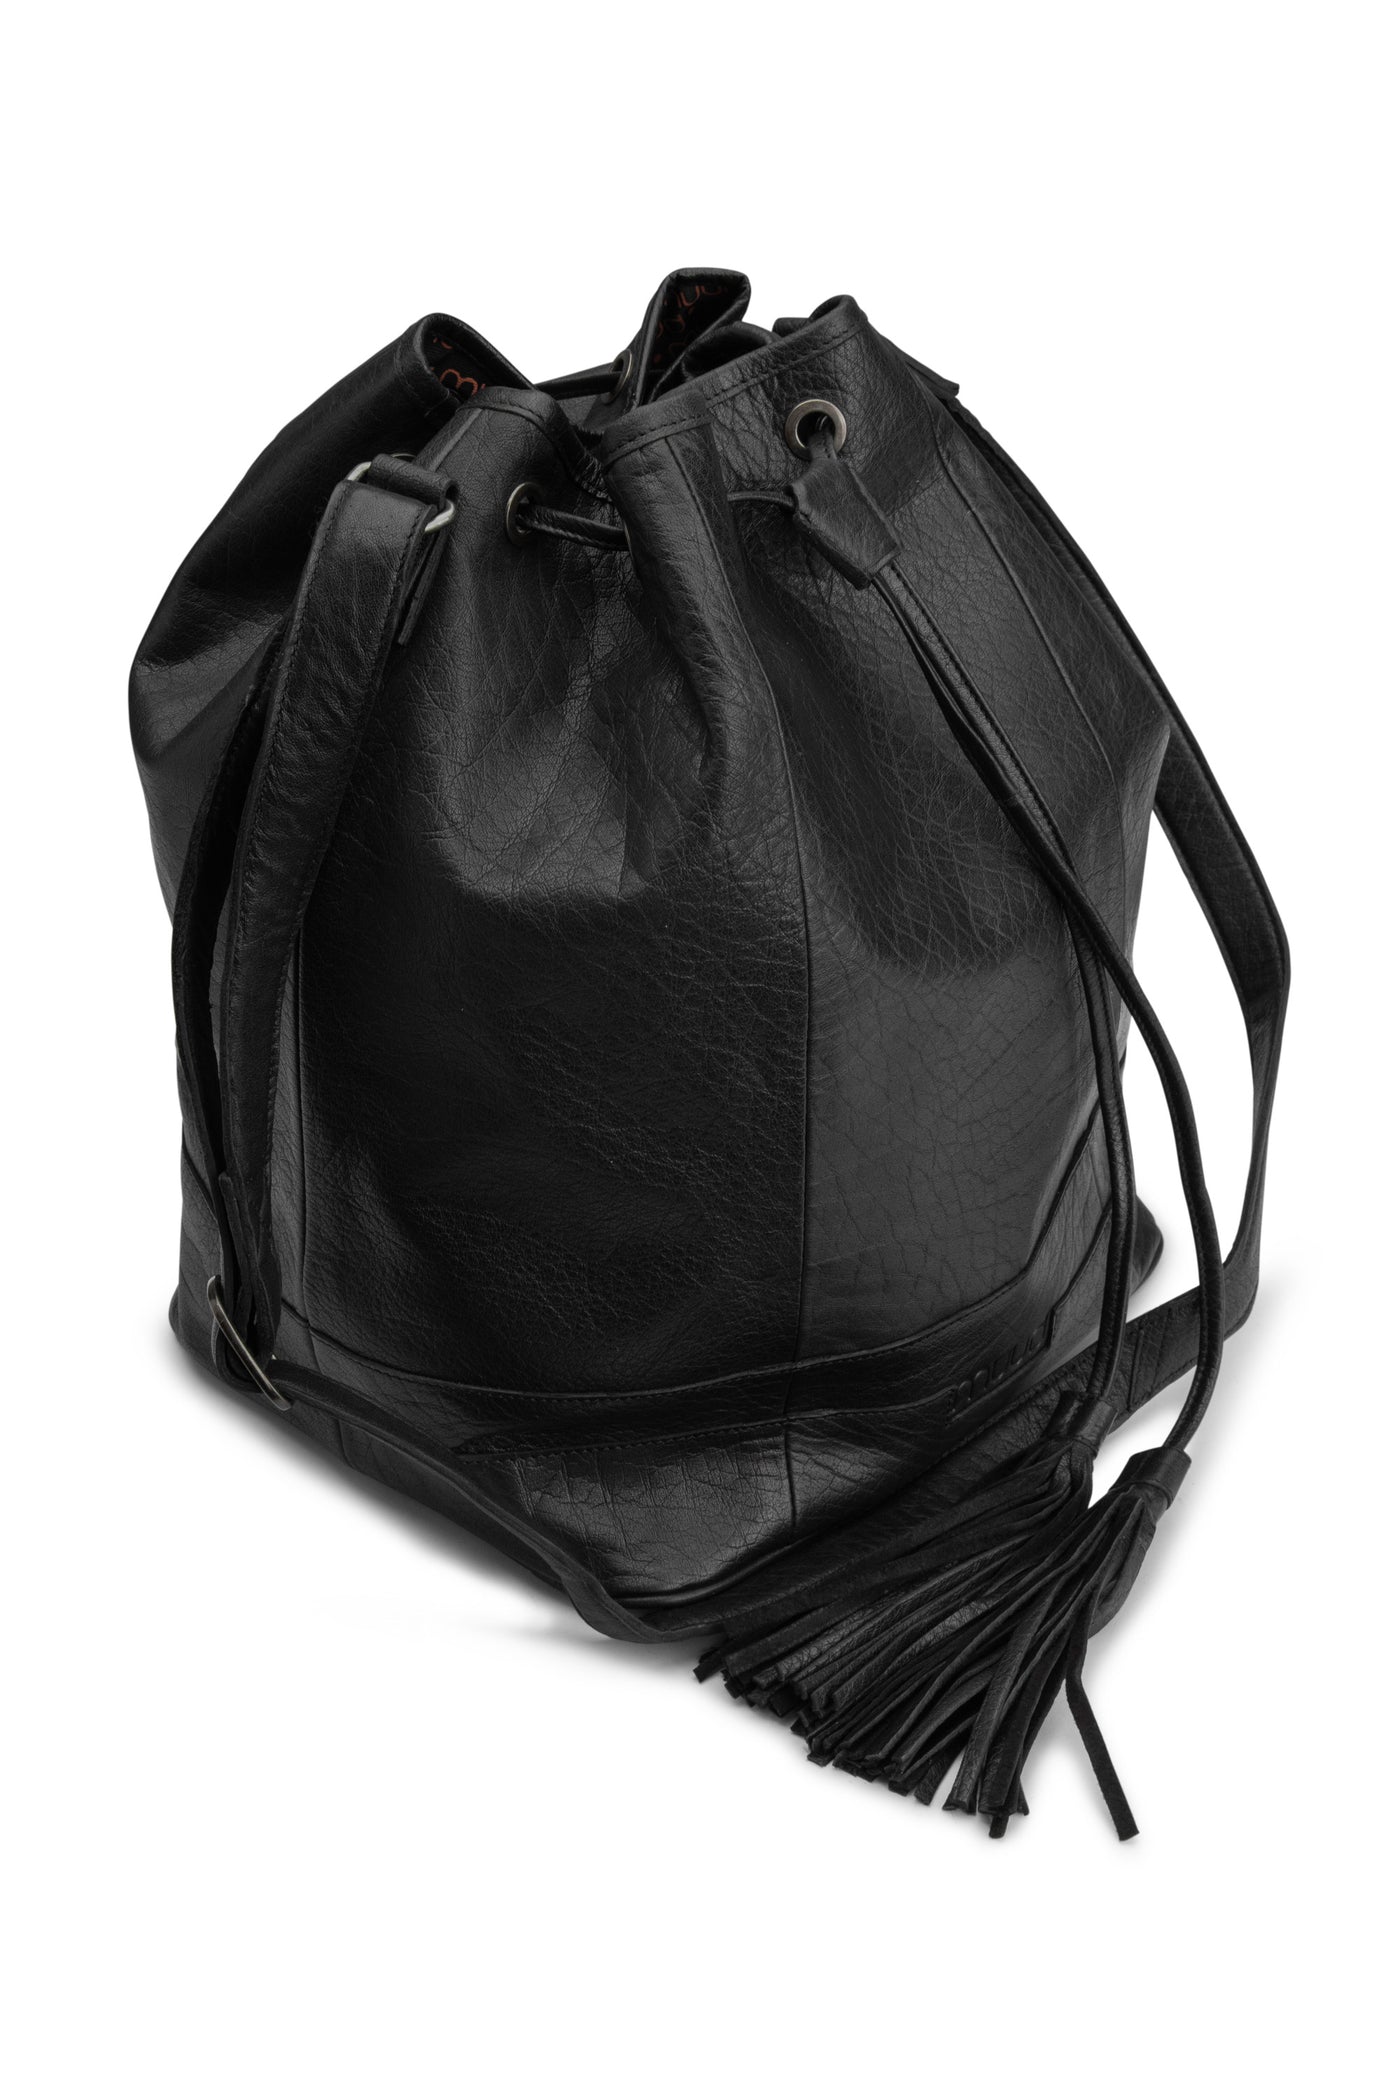 muud Marina Project Bag Kampagne Black